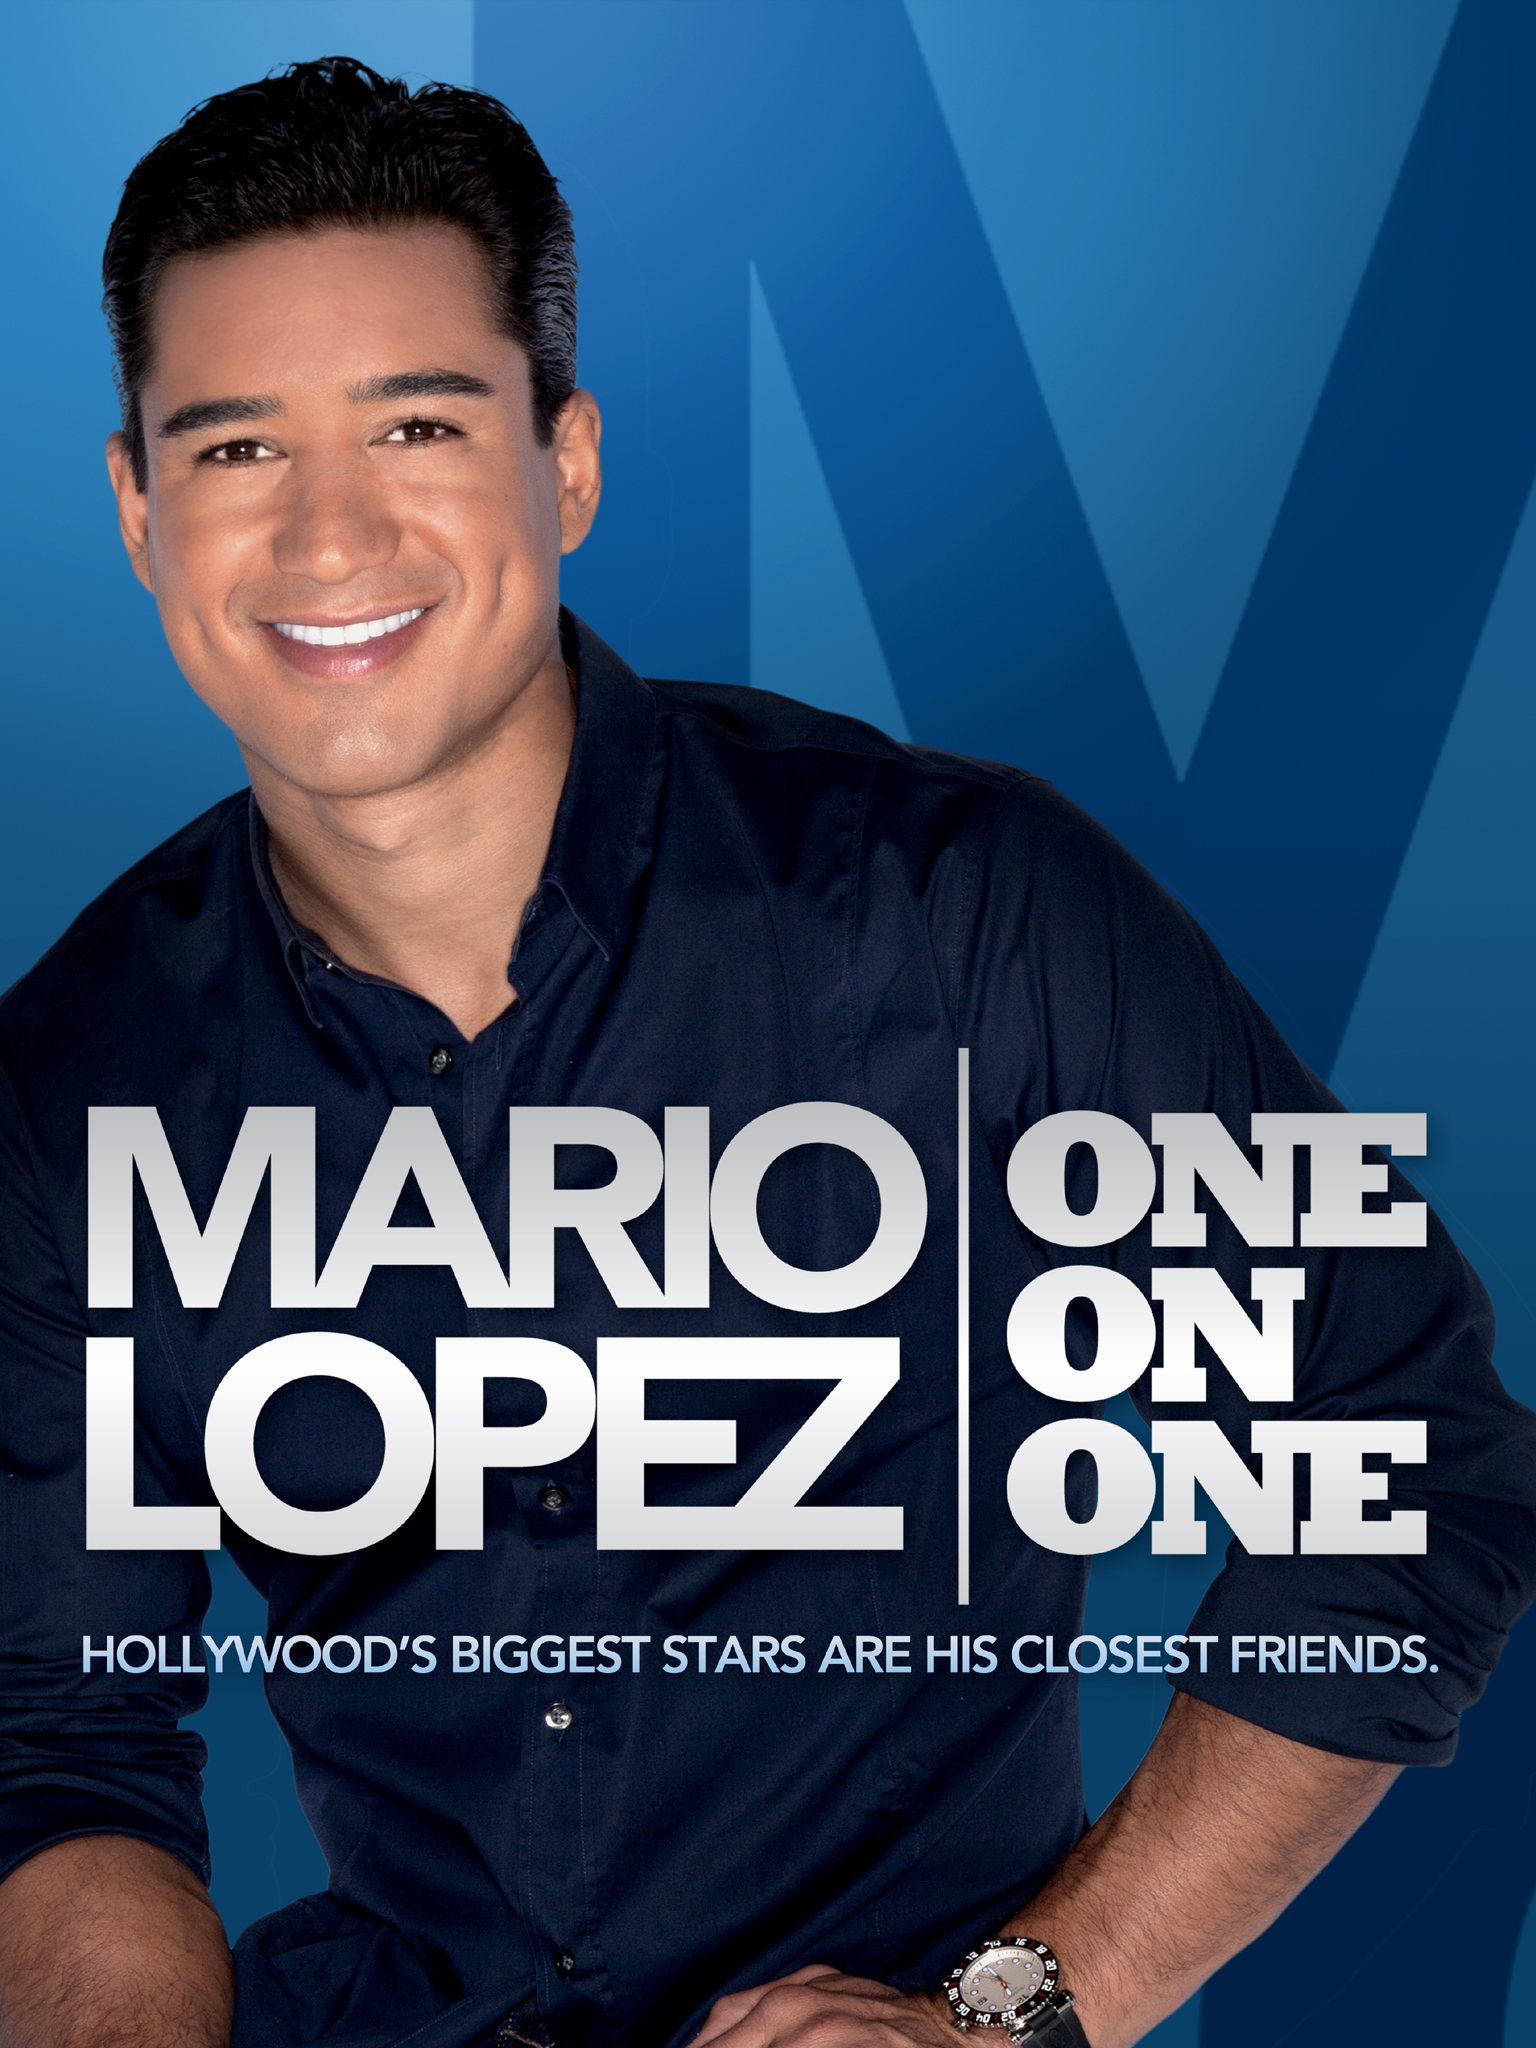 Mario Lopez: One on One